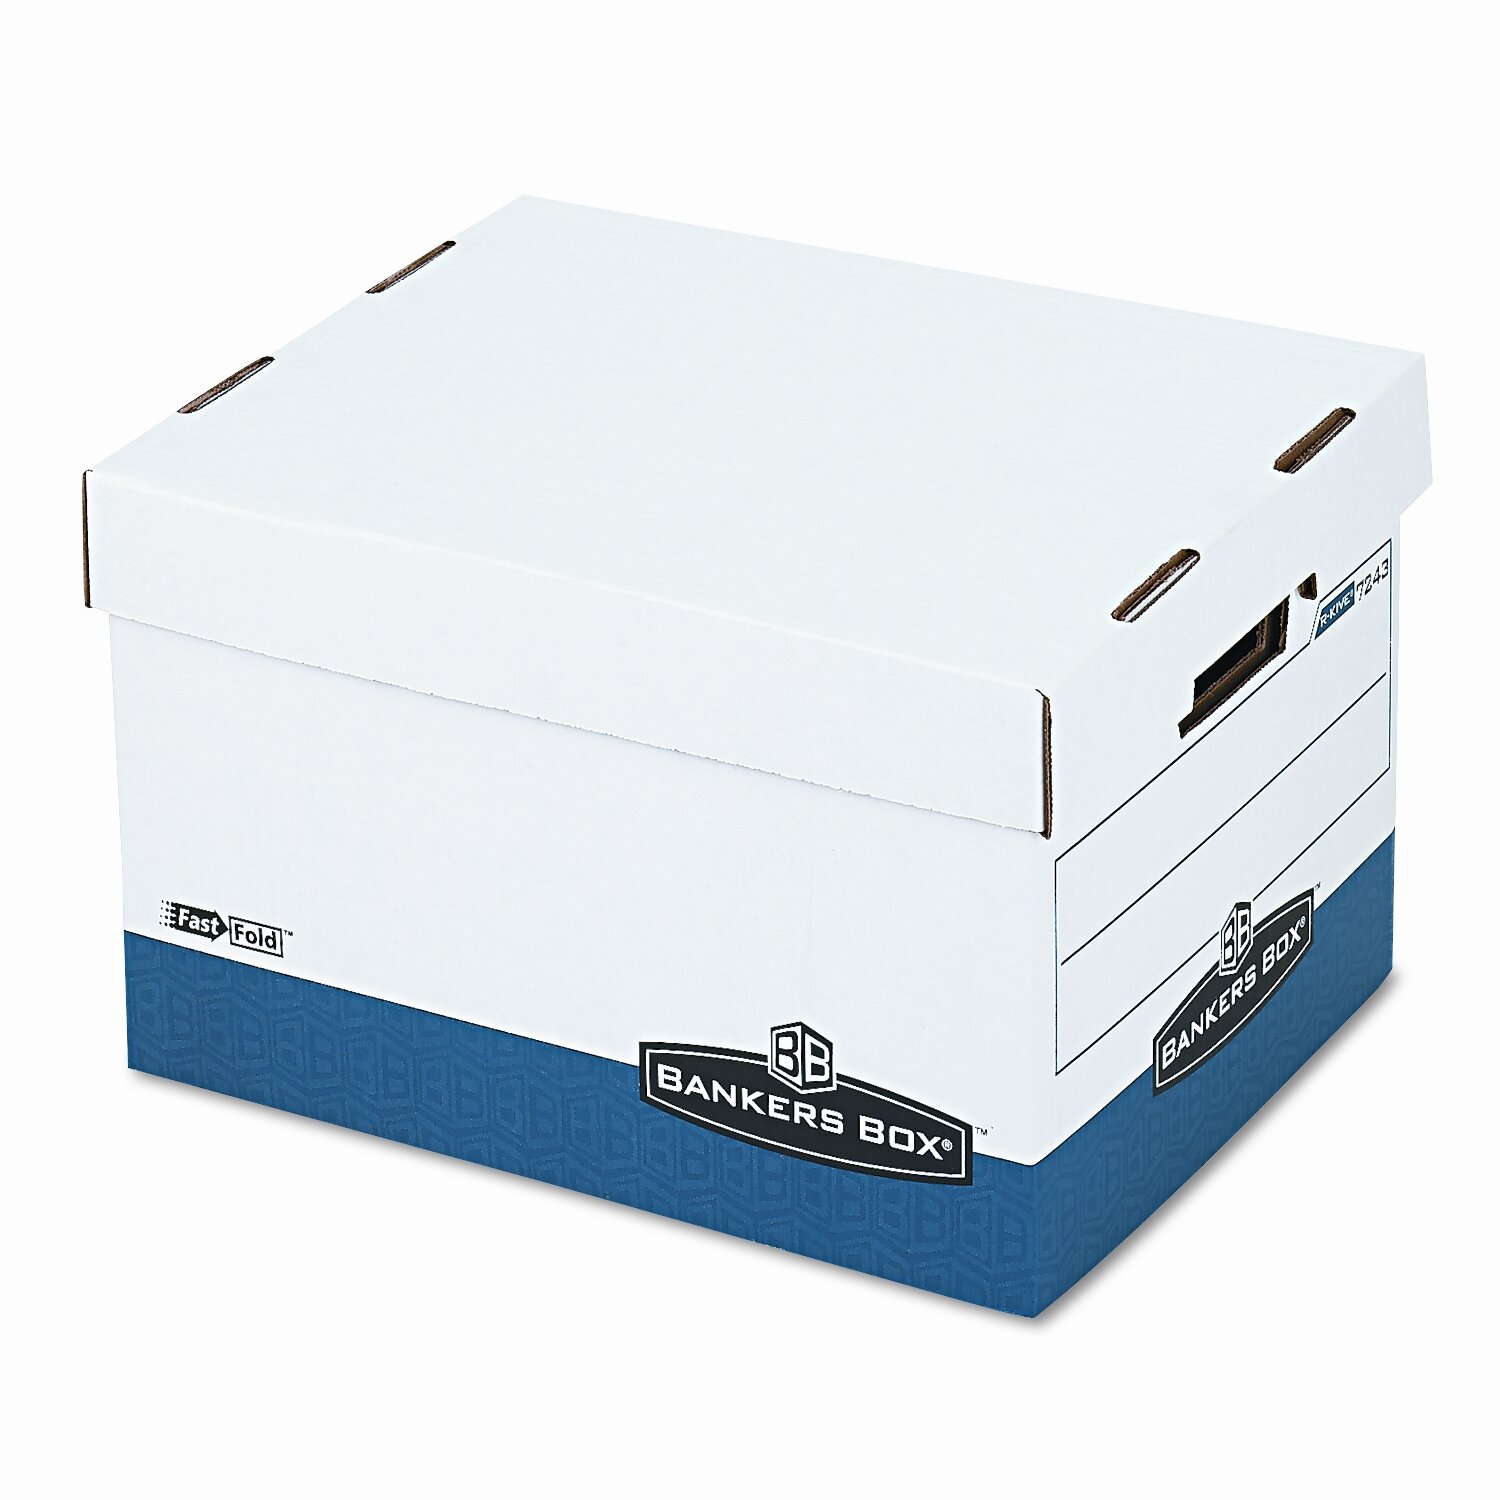 BANKERS BOX R-Kive Max Box, Letter/Legal, Paper, 12 x 15 x 10, White/Blue,  4/Ctn